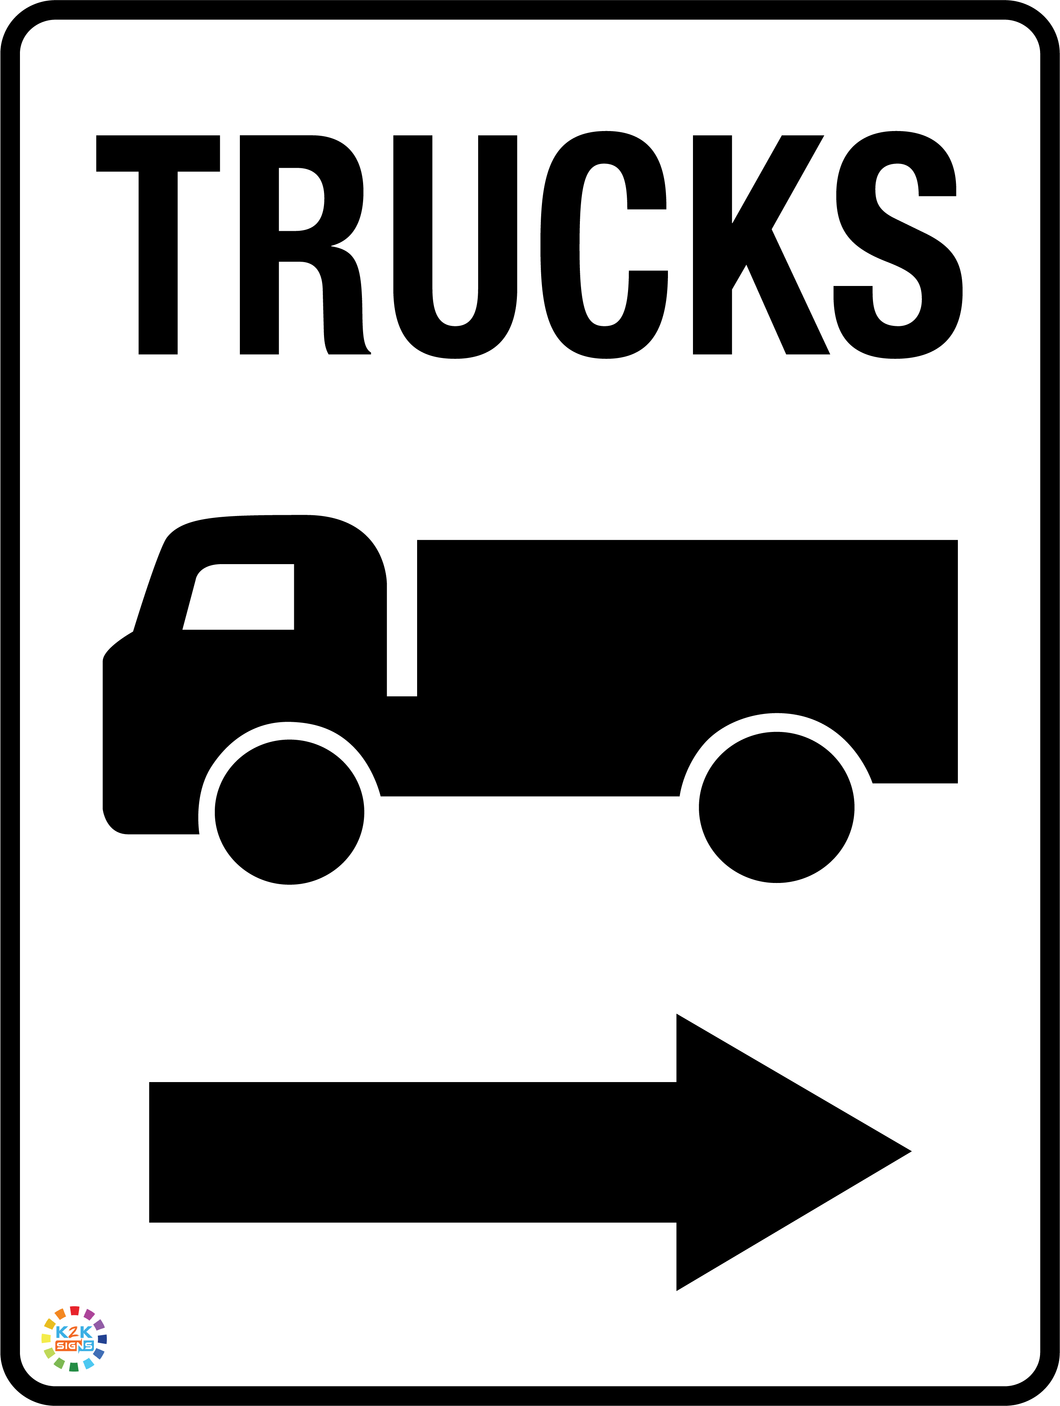 Trucks (Right Arrow)